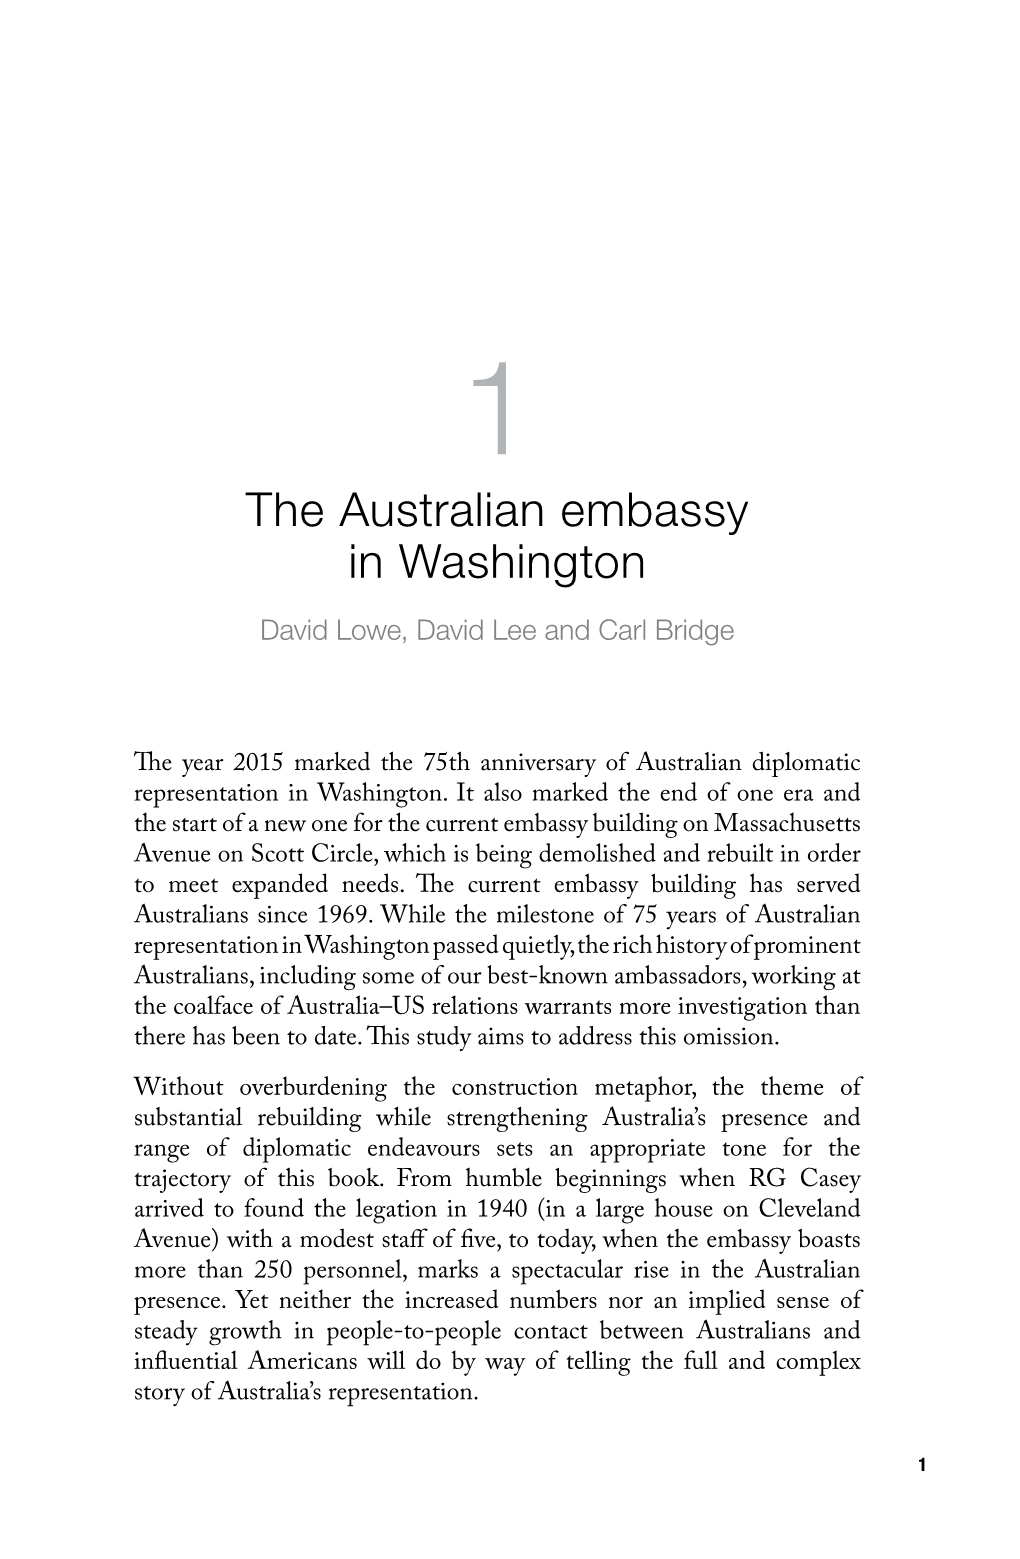 The Australian Embassy in Washington David Lowe, David Lee and Carl Bridge